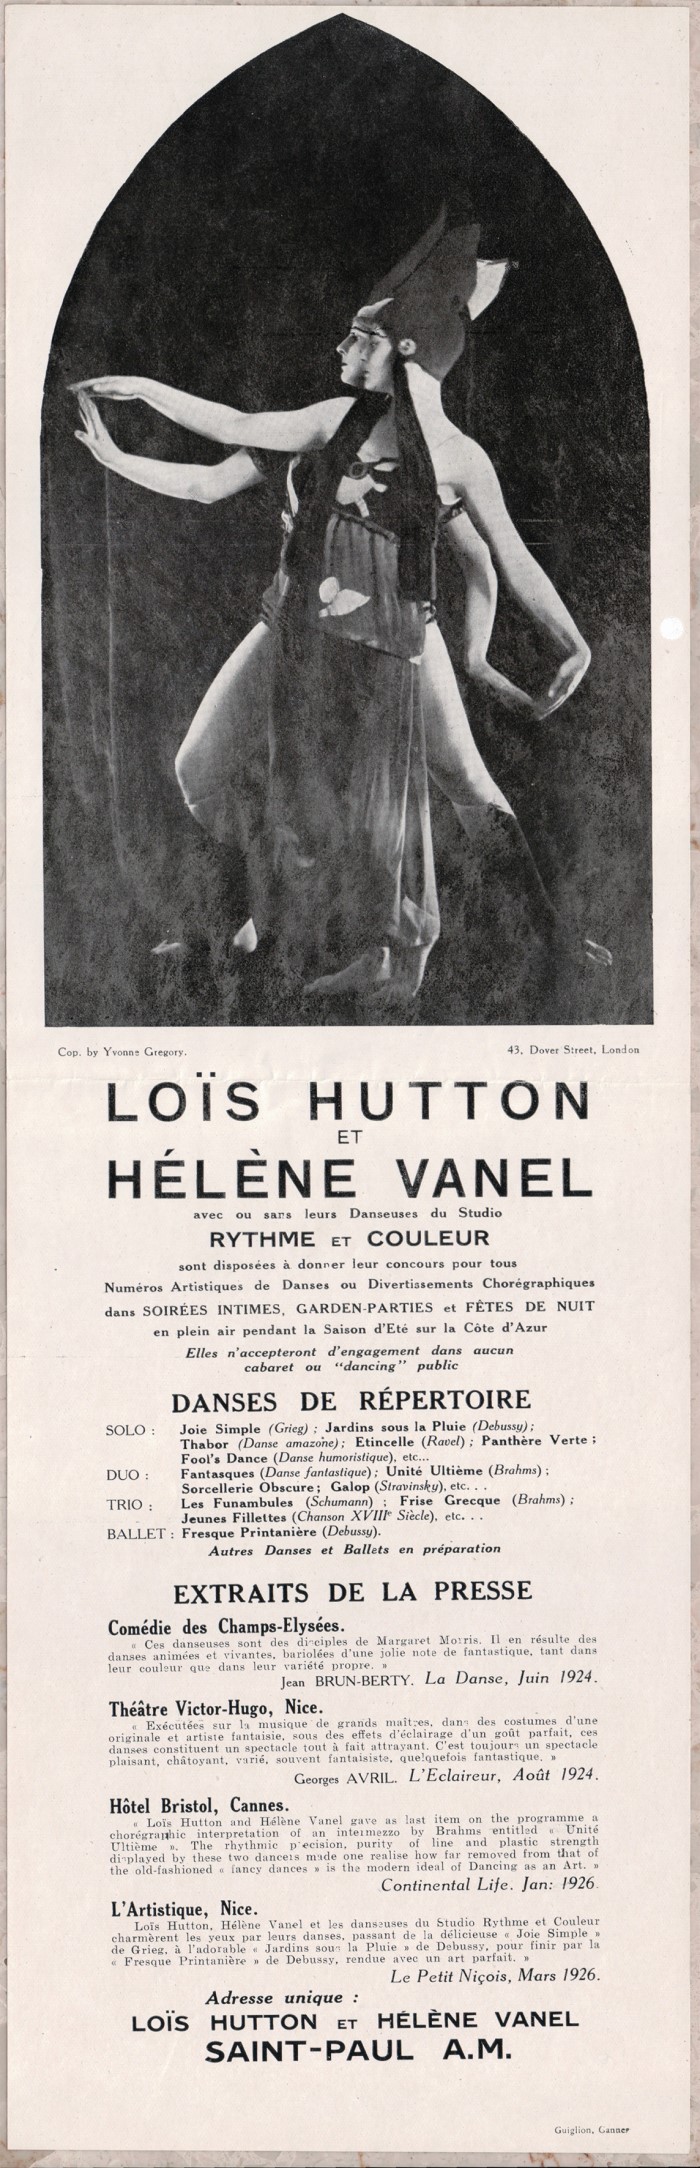  A flyer advertising Loïs Hutton and Hélène Vanel, and the Studio Rythme et Couleur,